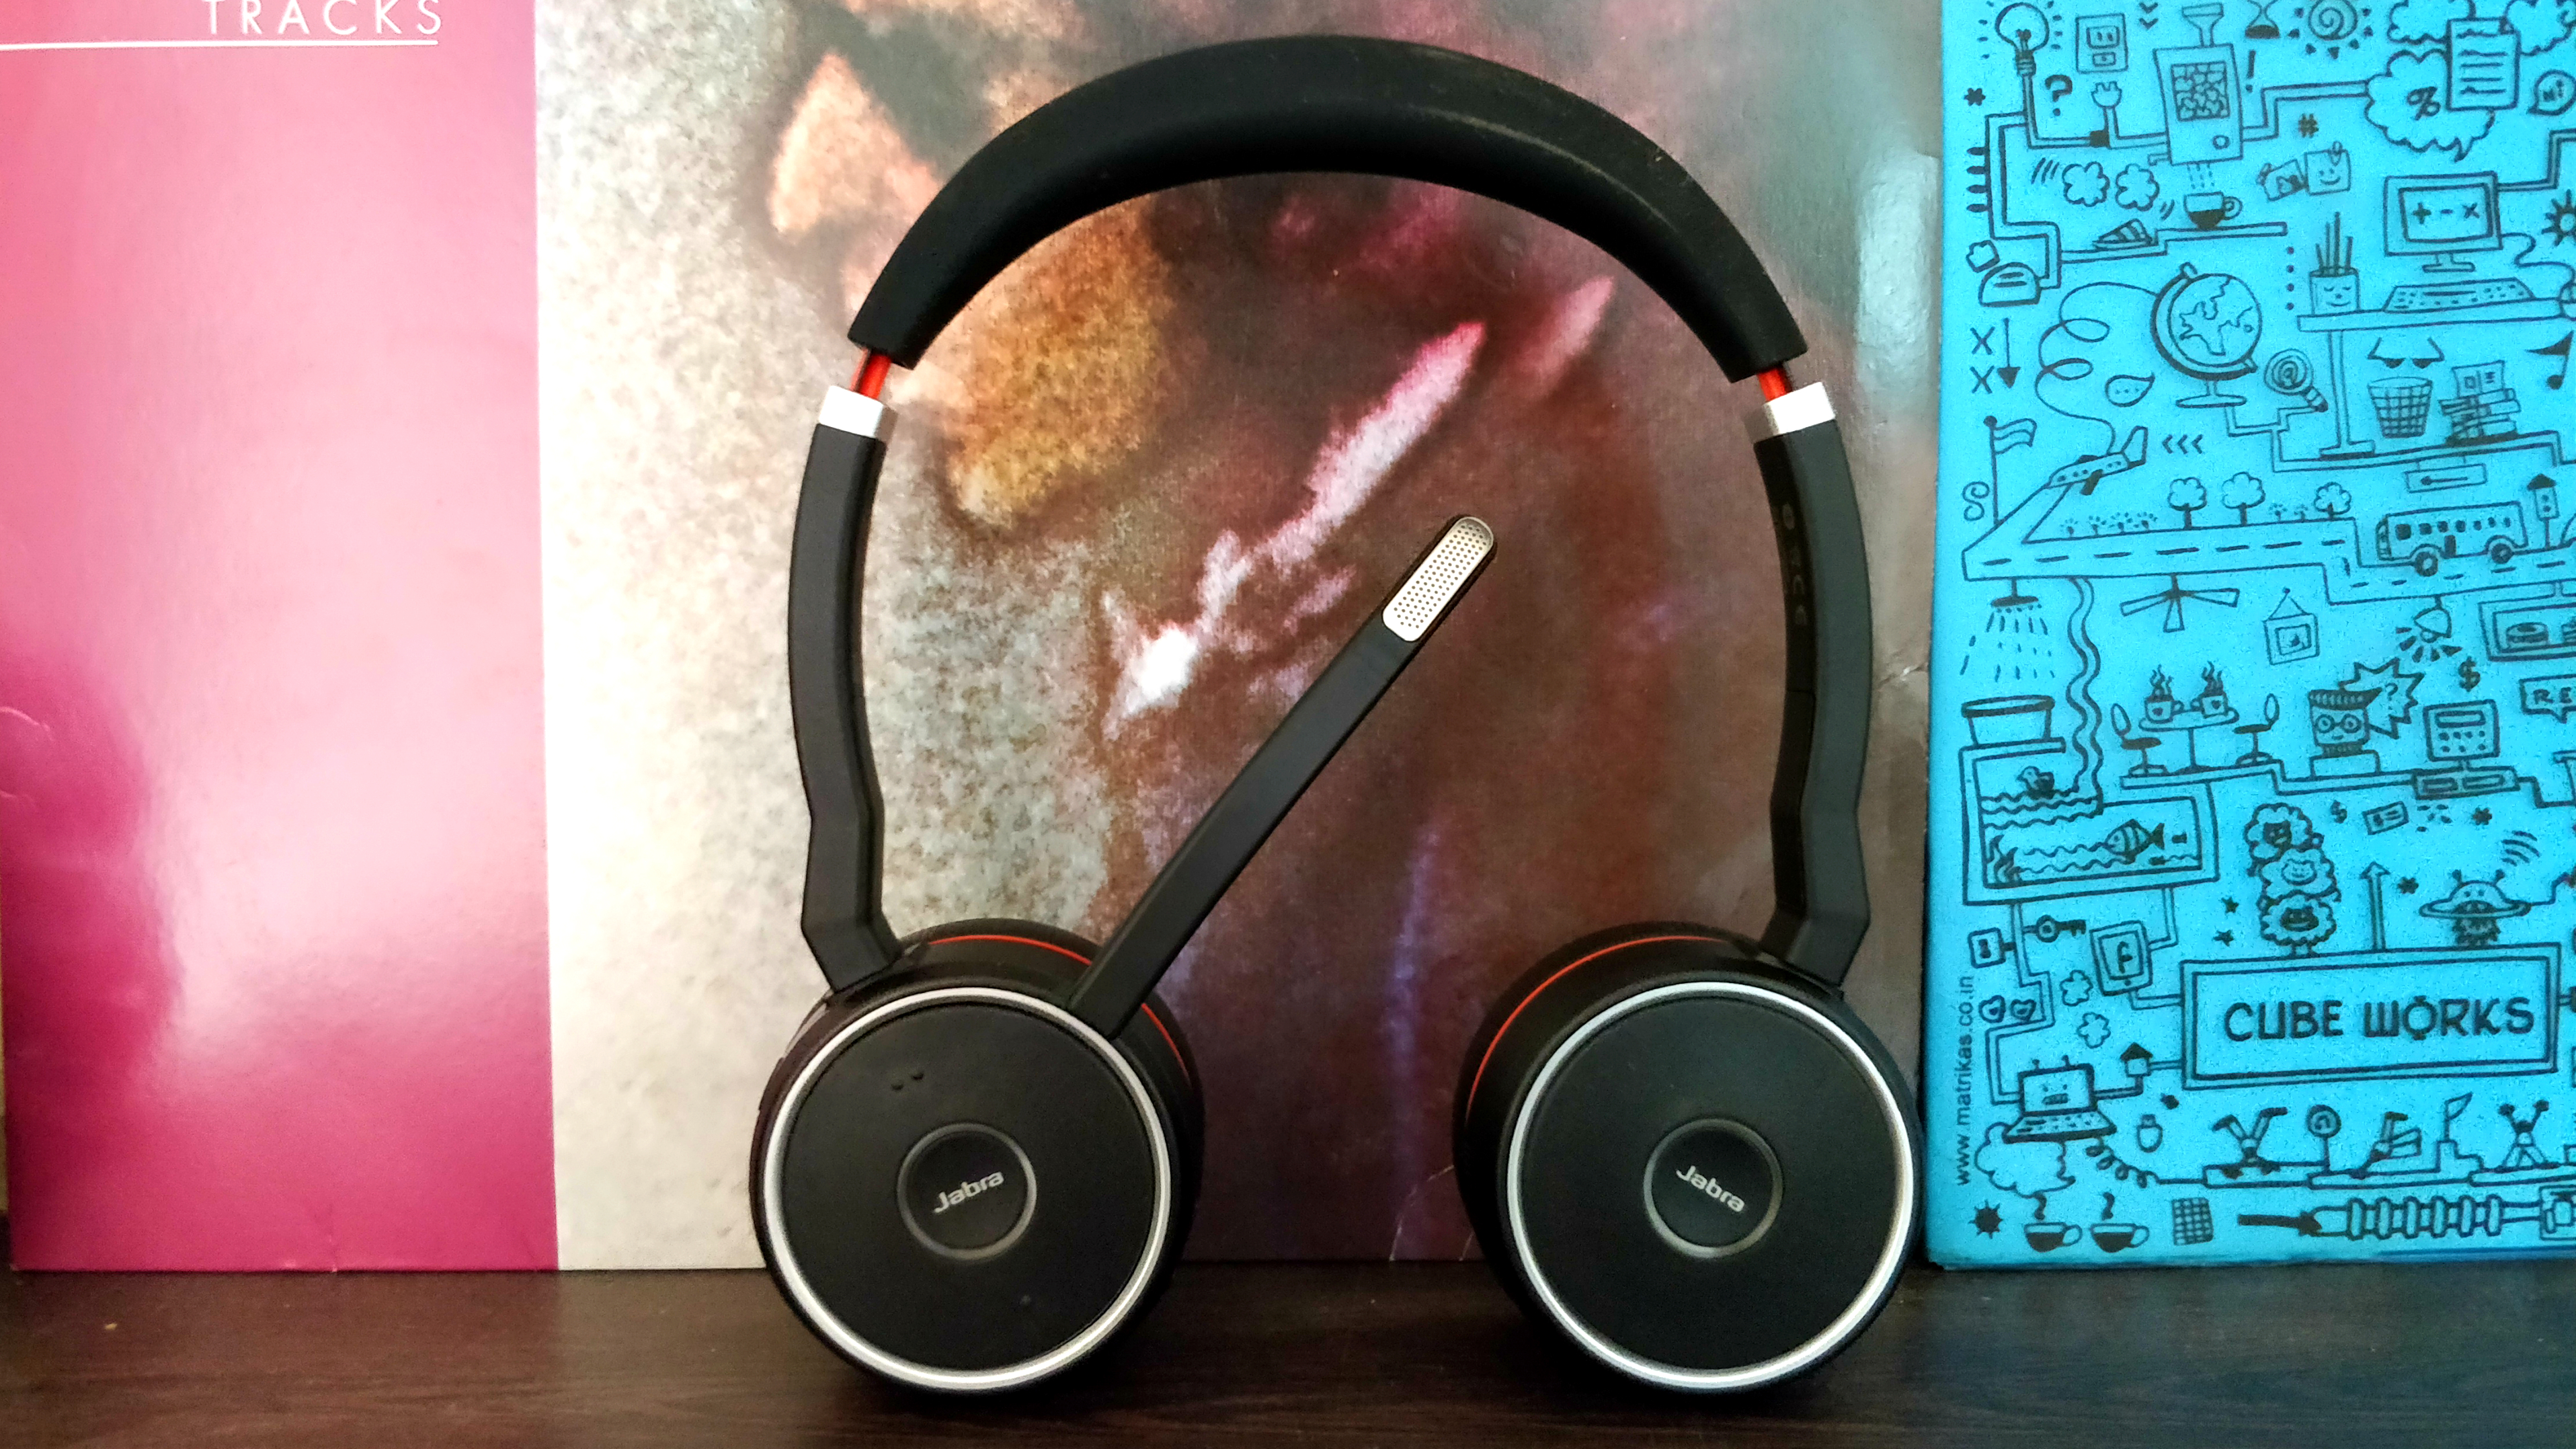 Review - The Jabra Evolve 75 headphones and stand. #Jabra